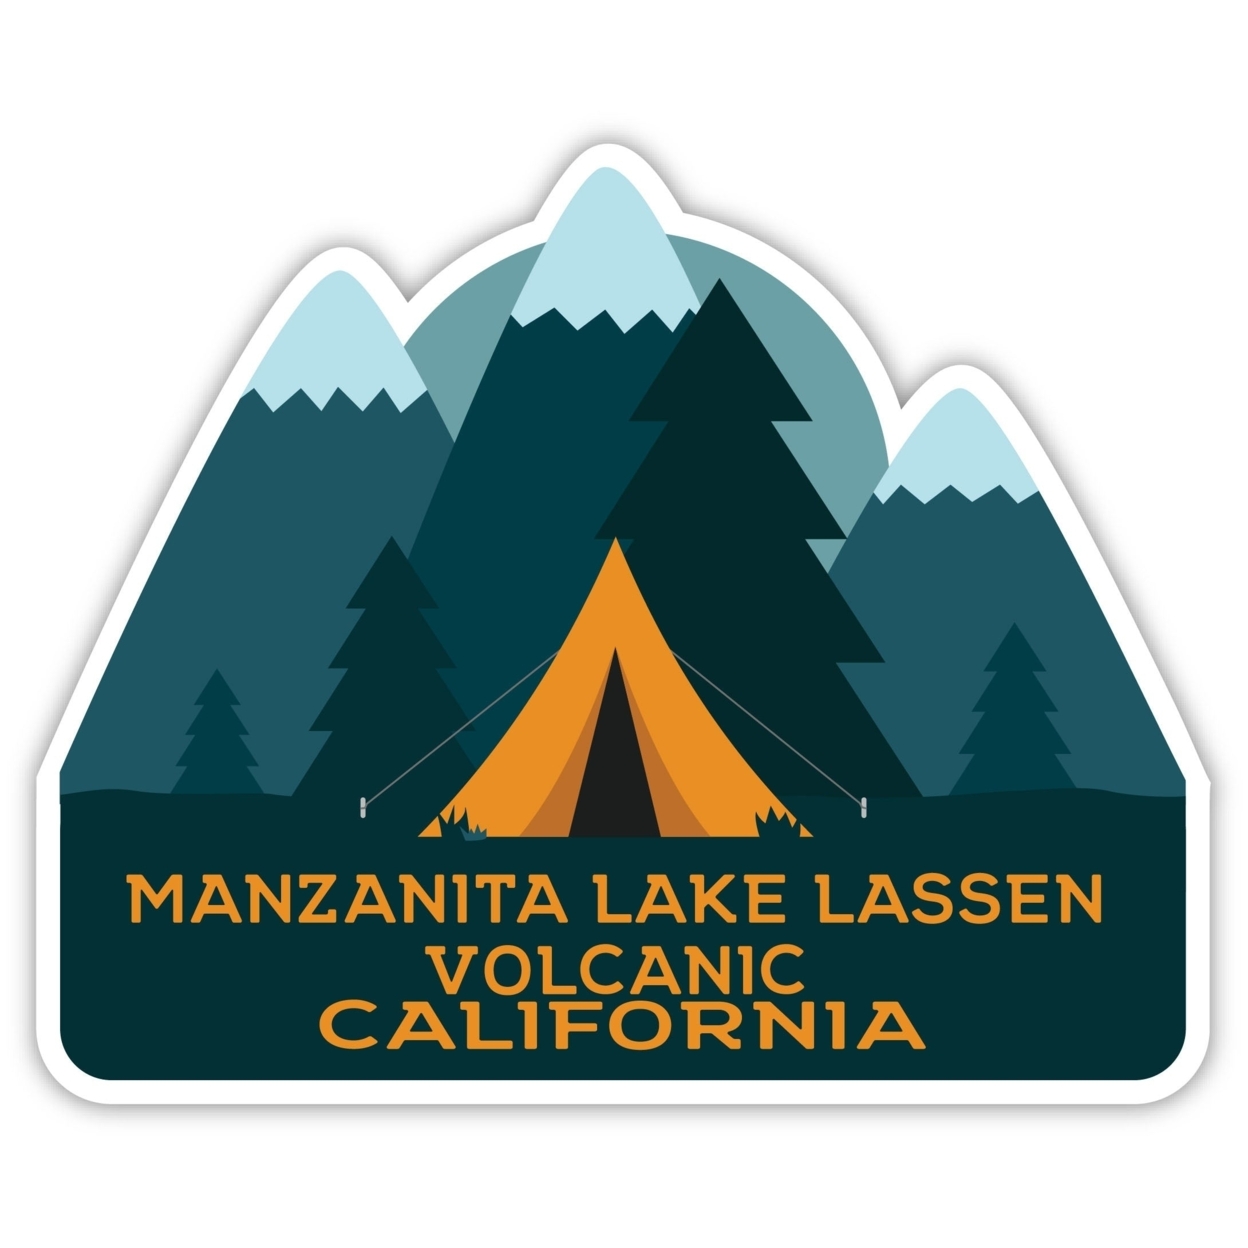 Manzanita Lake Lassen Volcanic California Souvenir Decorative Stickers (Choose Theme And Size) - 4-Inch, Tent